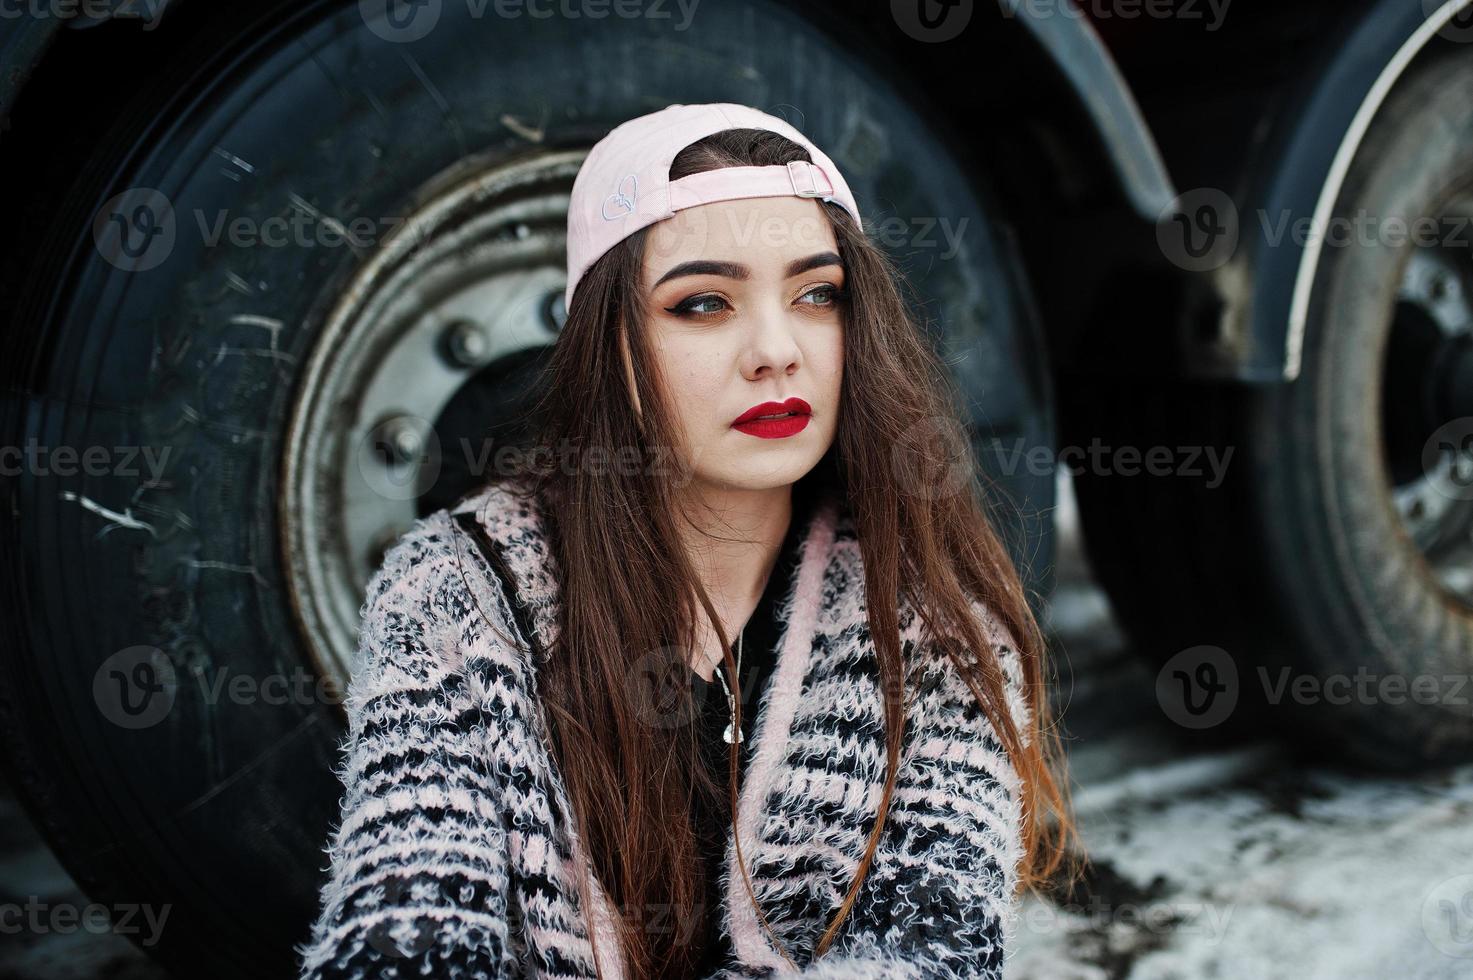 Brunette stylish casual girl in cap sitting against truck wheels. photo